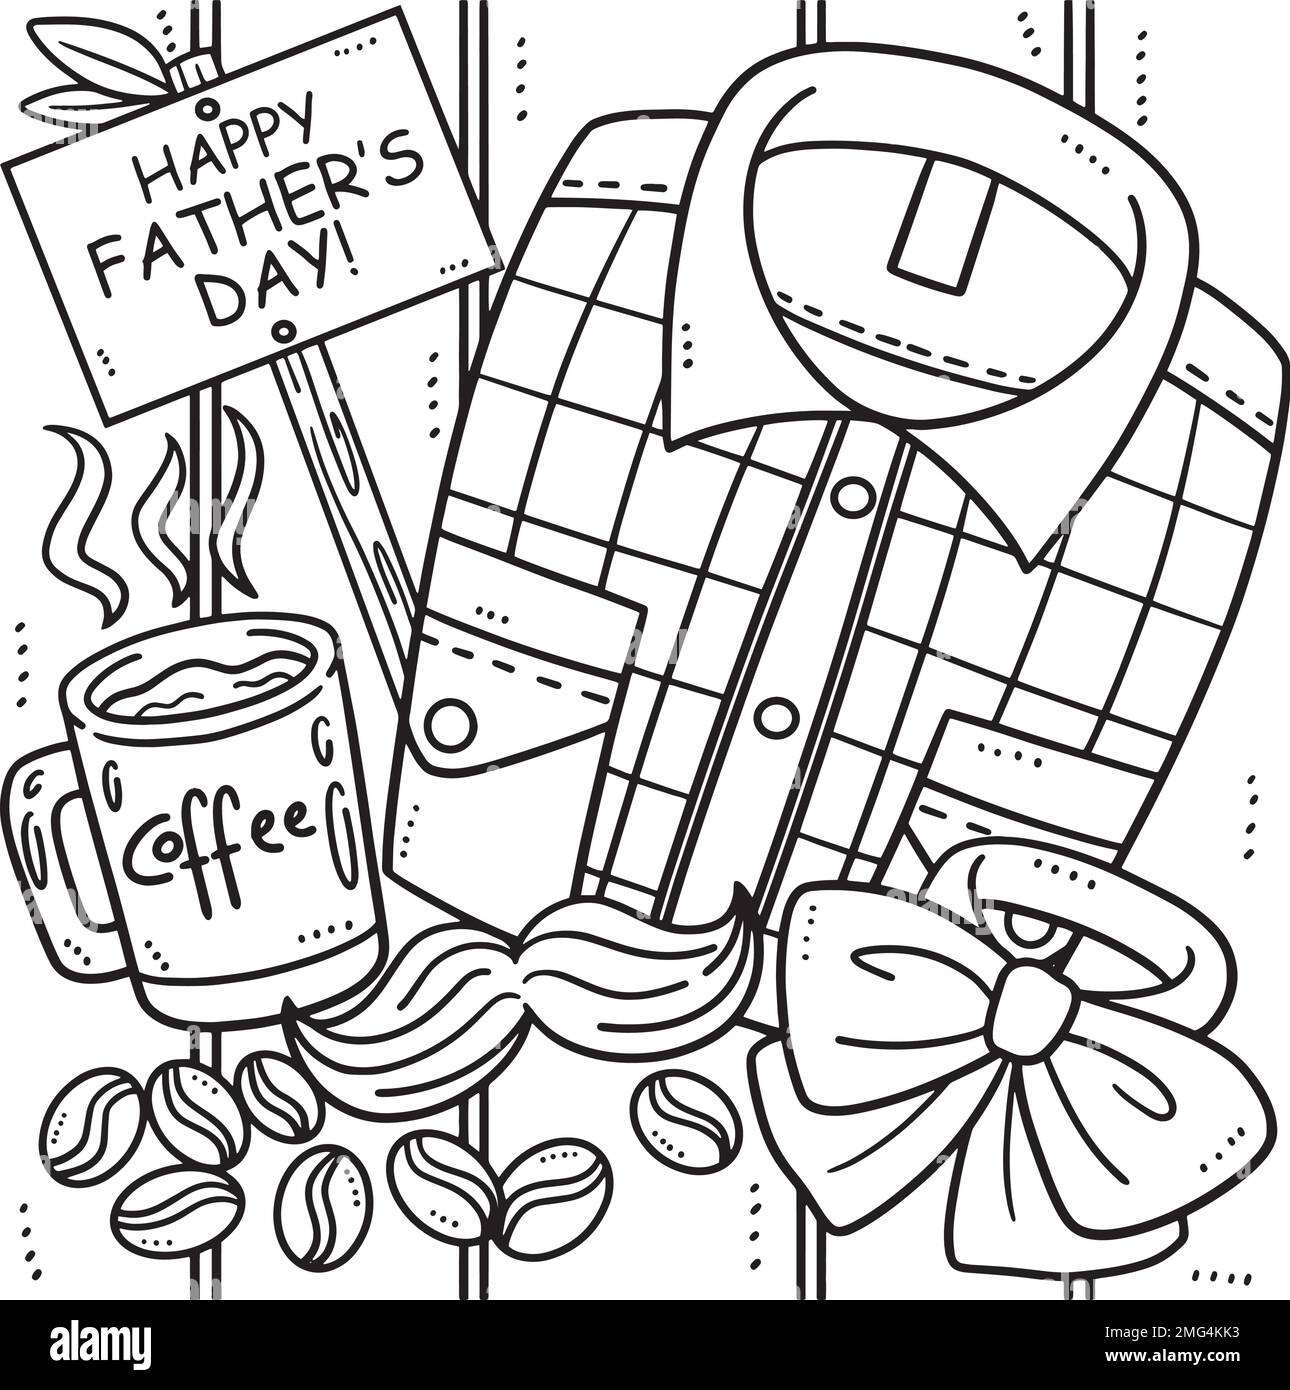 Fathers day cartoon Stock Photos, Royalty Free Fathers day cartoon Images |  Depositphotos